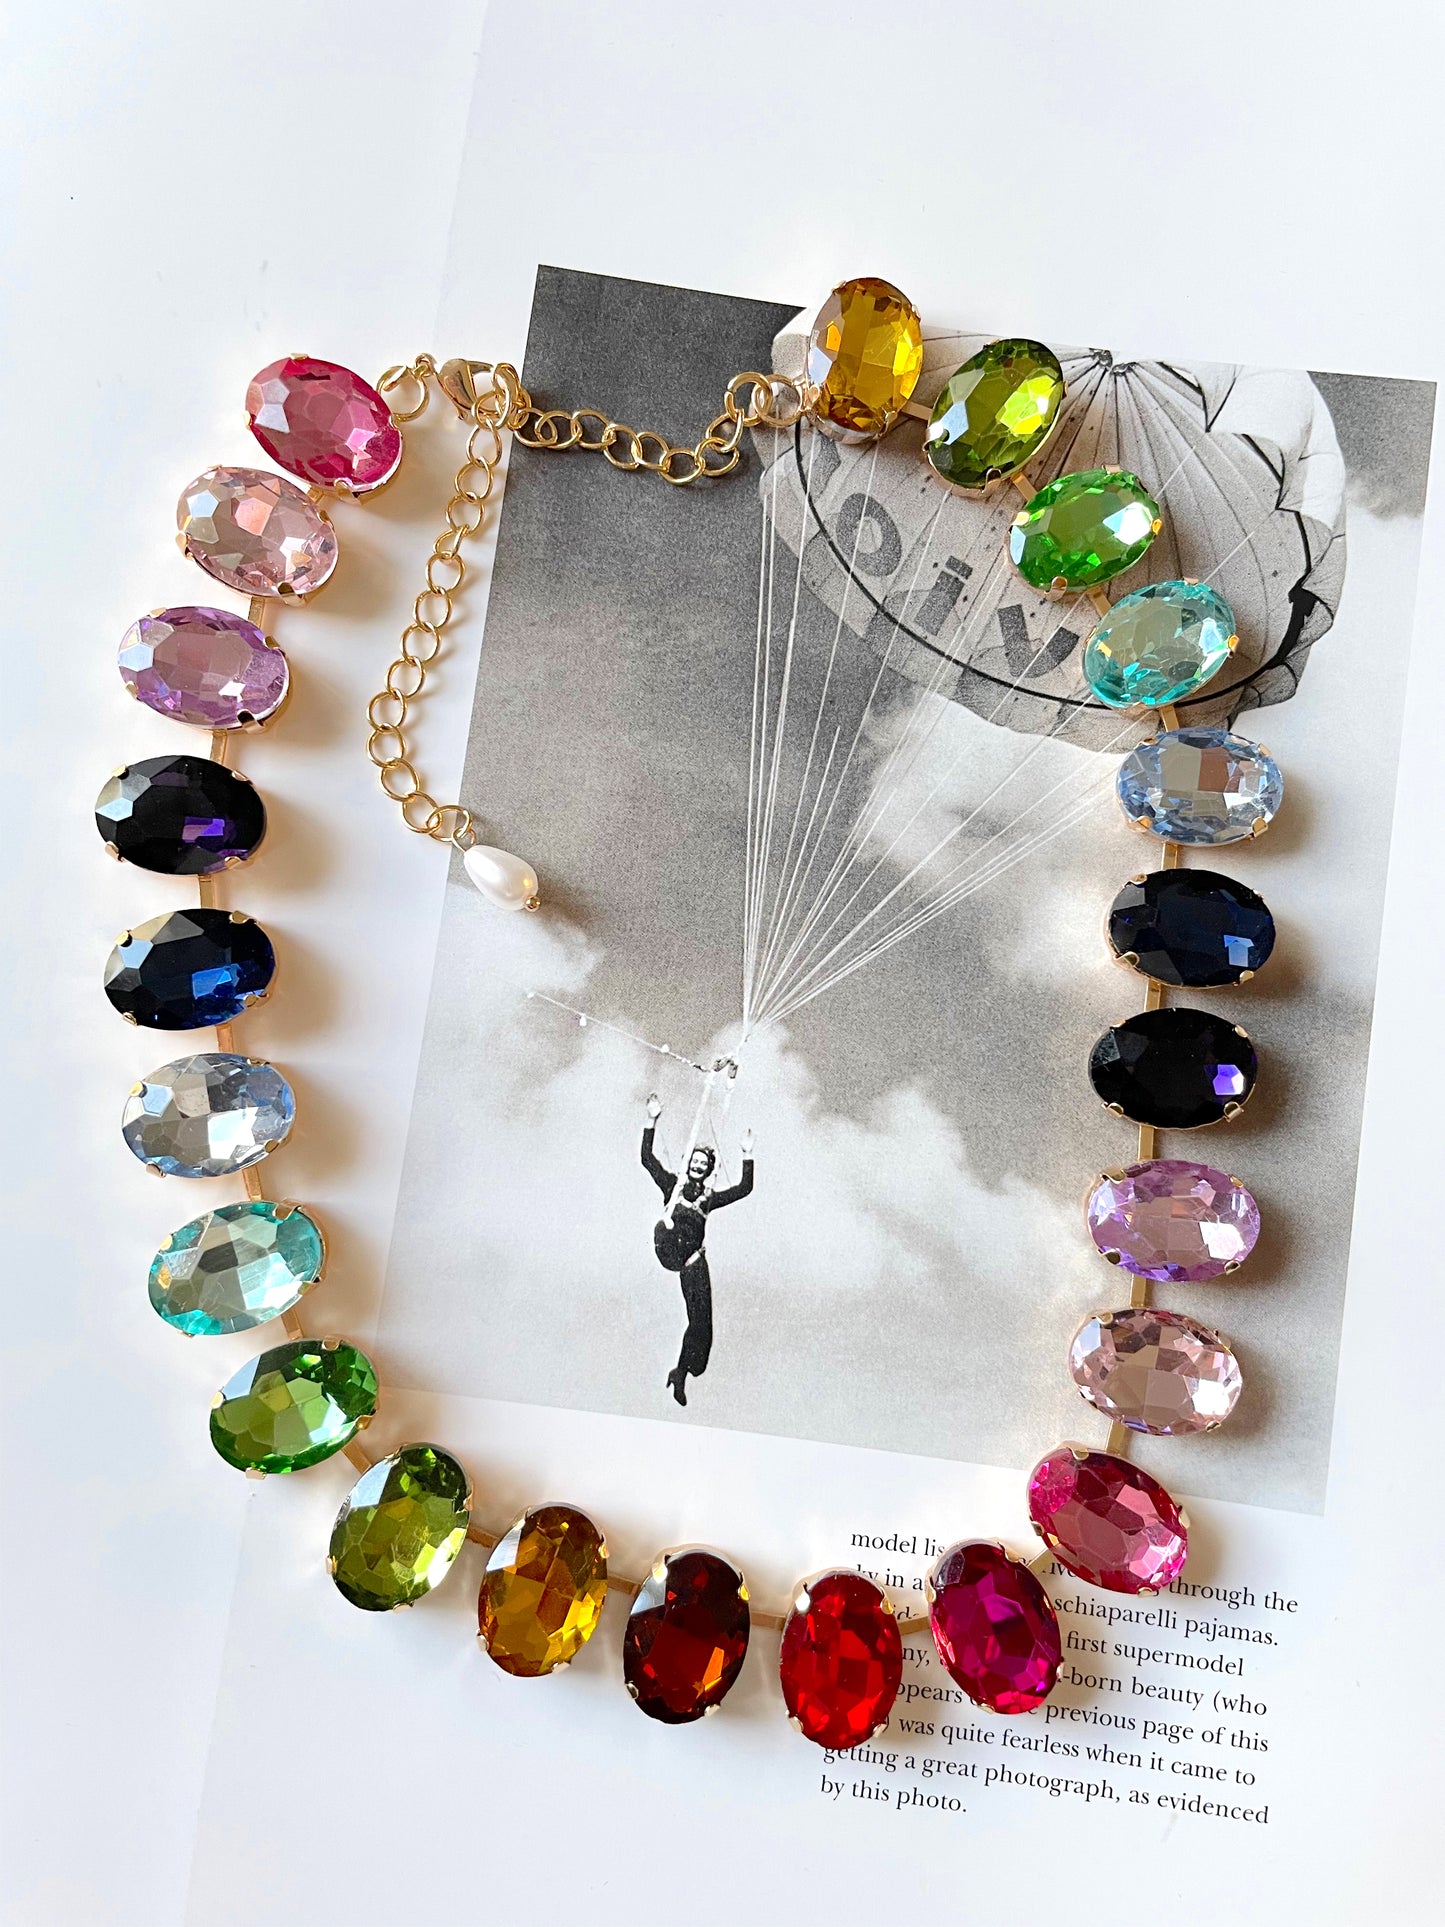 Rainbow dream necklace